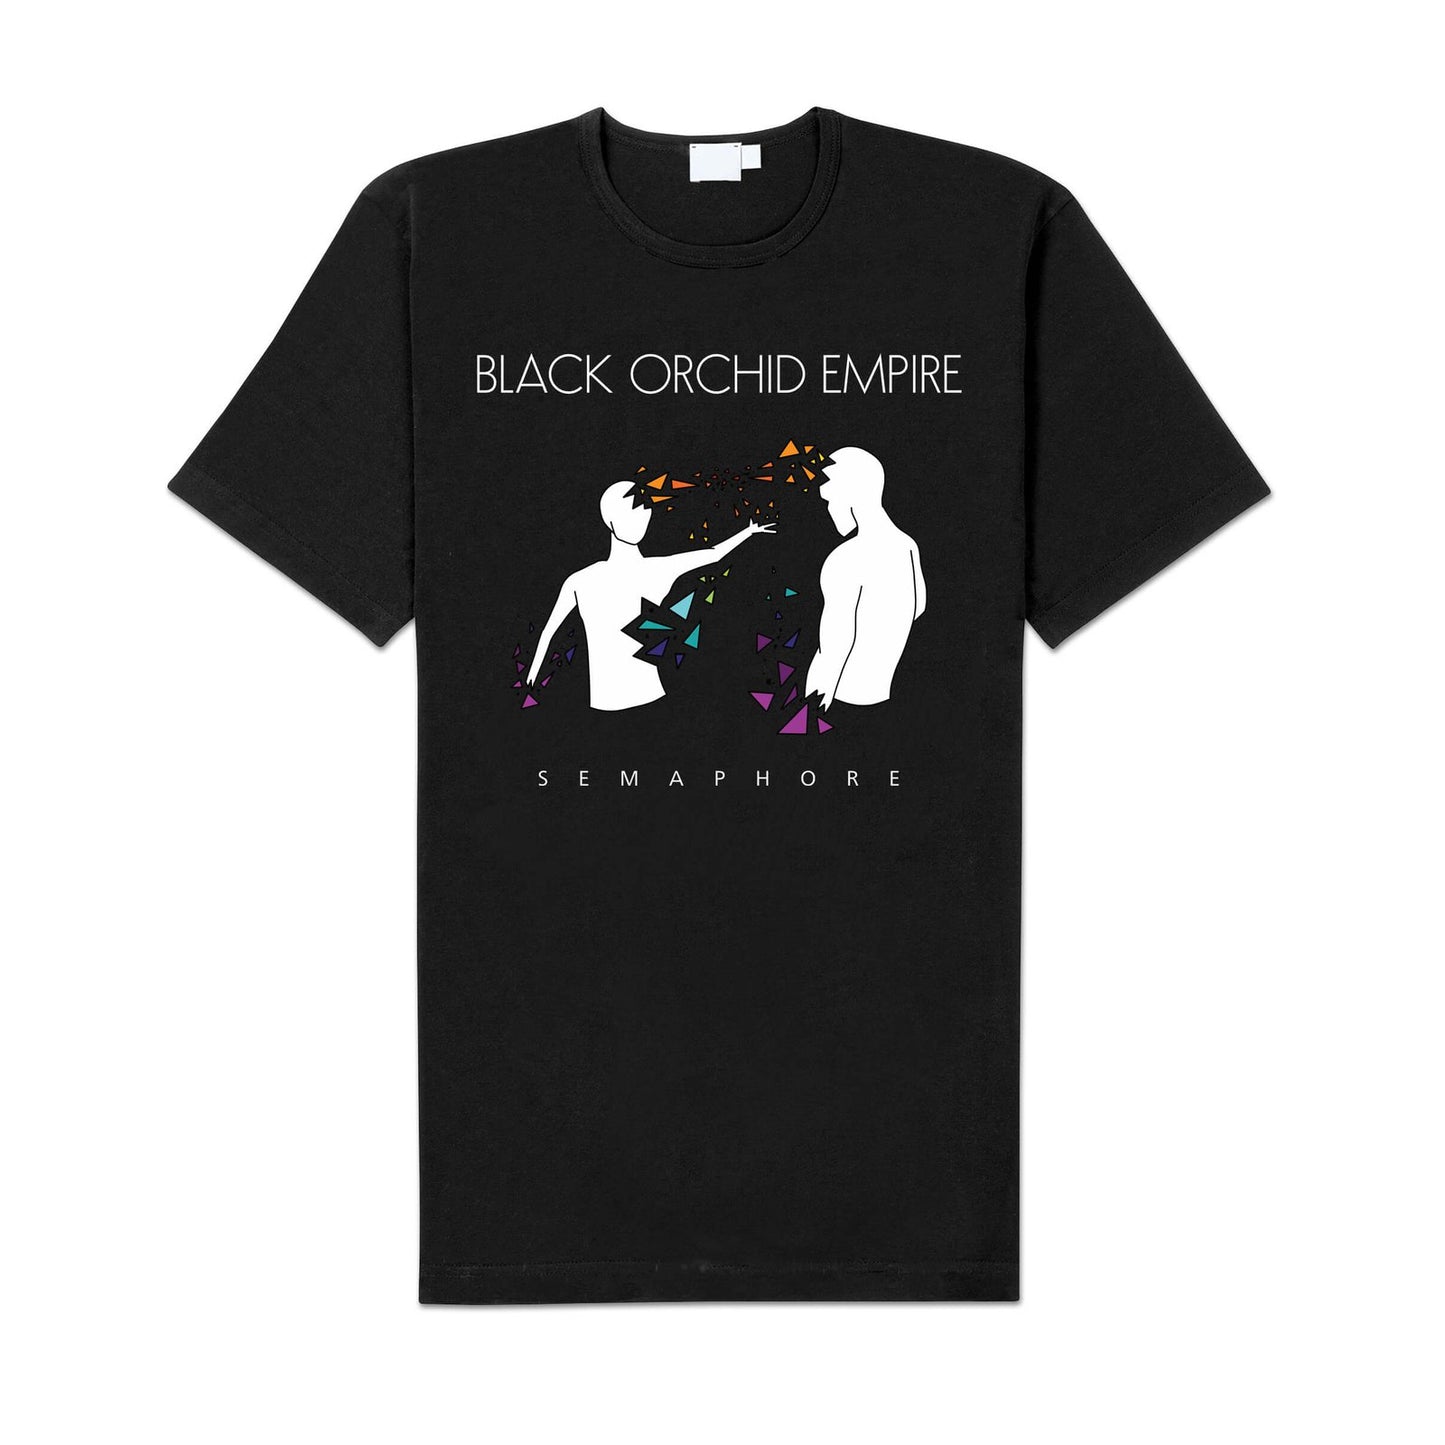 Black Orchid Empire "Semaphore" Shirt